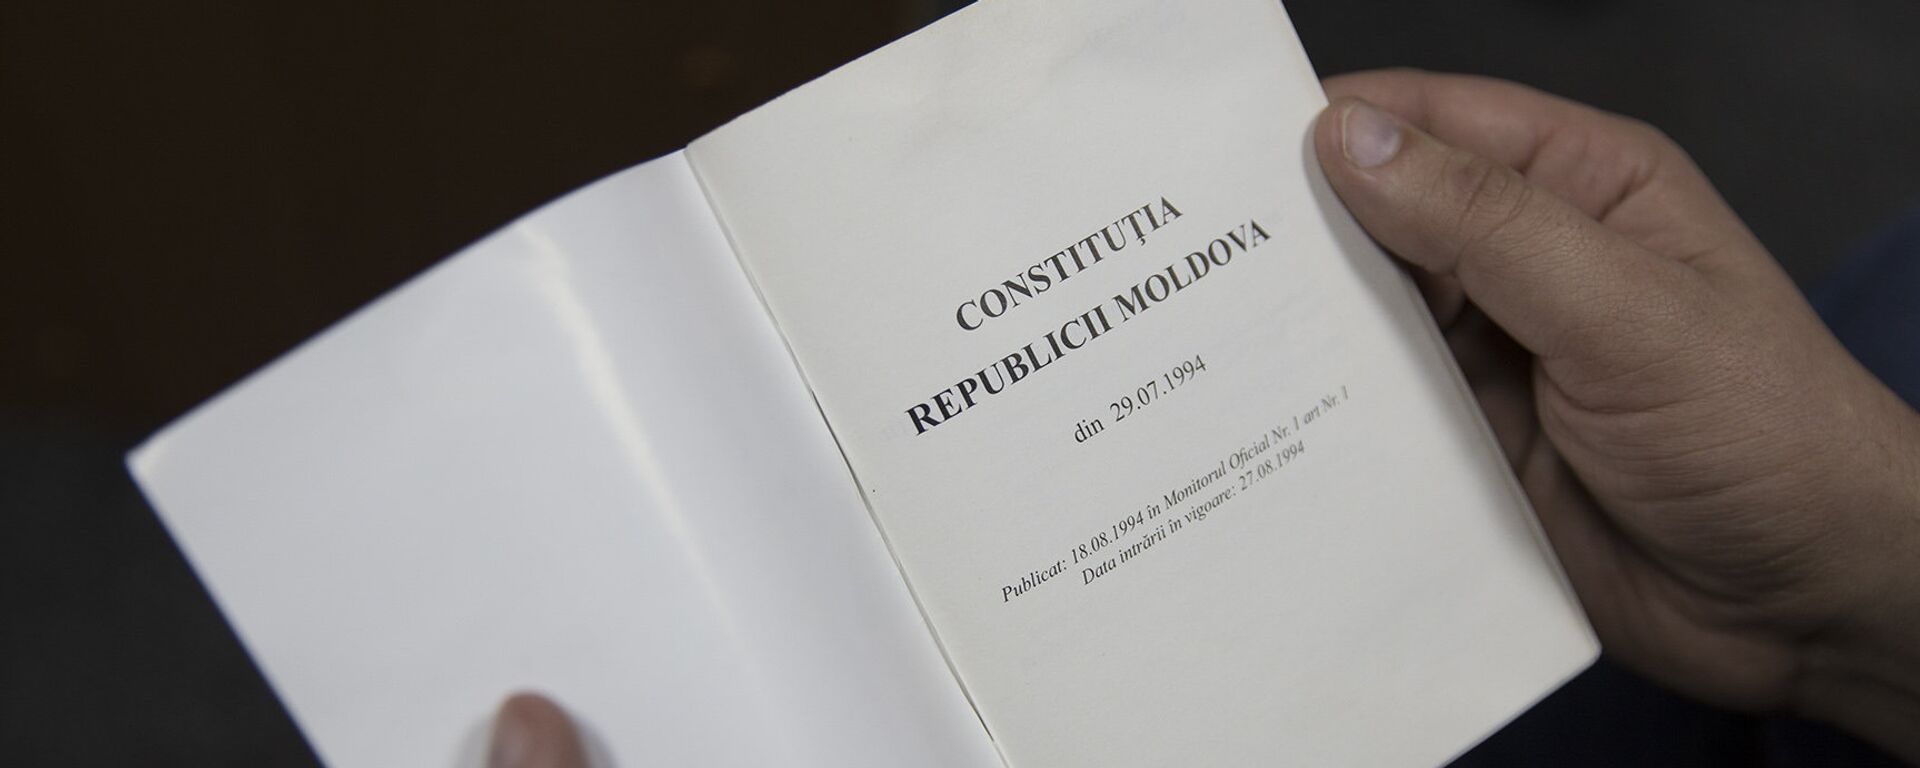 Конституция РМ - Sputnik Молдова, 1920, 29.07.2020